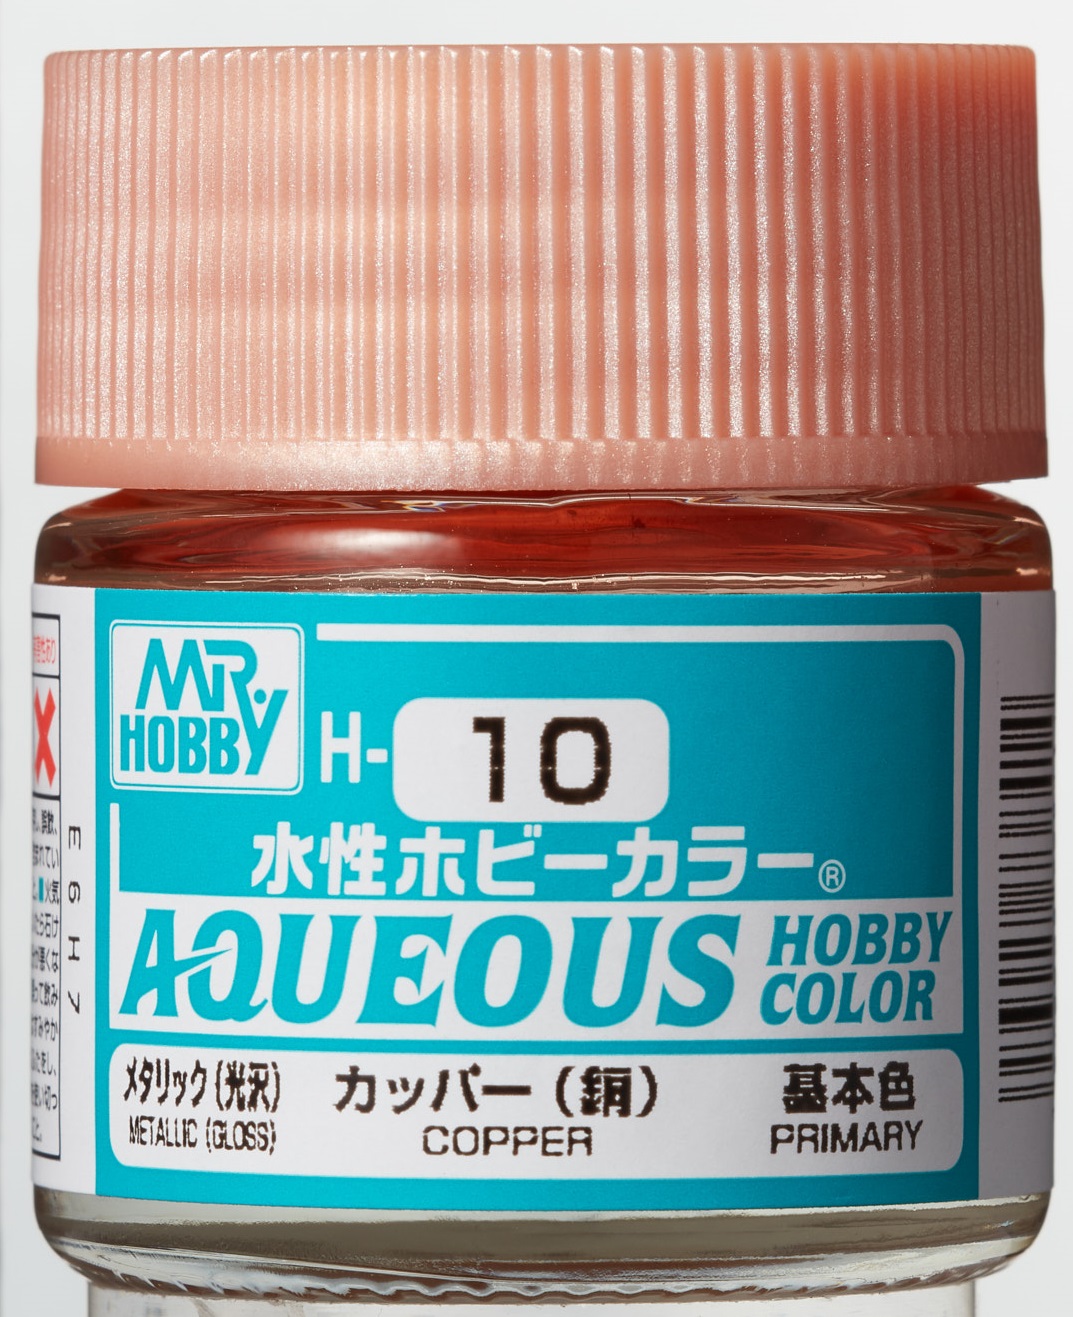 Mr. Aqueous Hobby Color - Copper - H10 - Kupfer